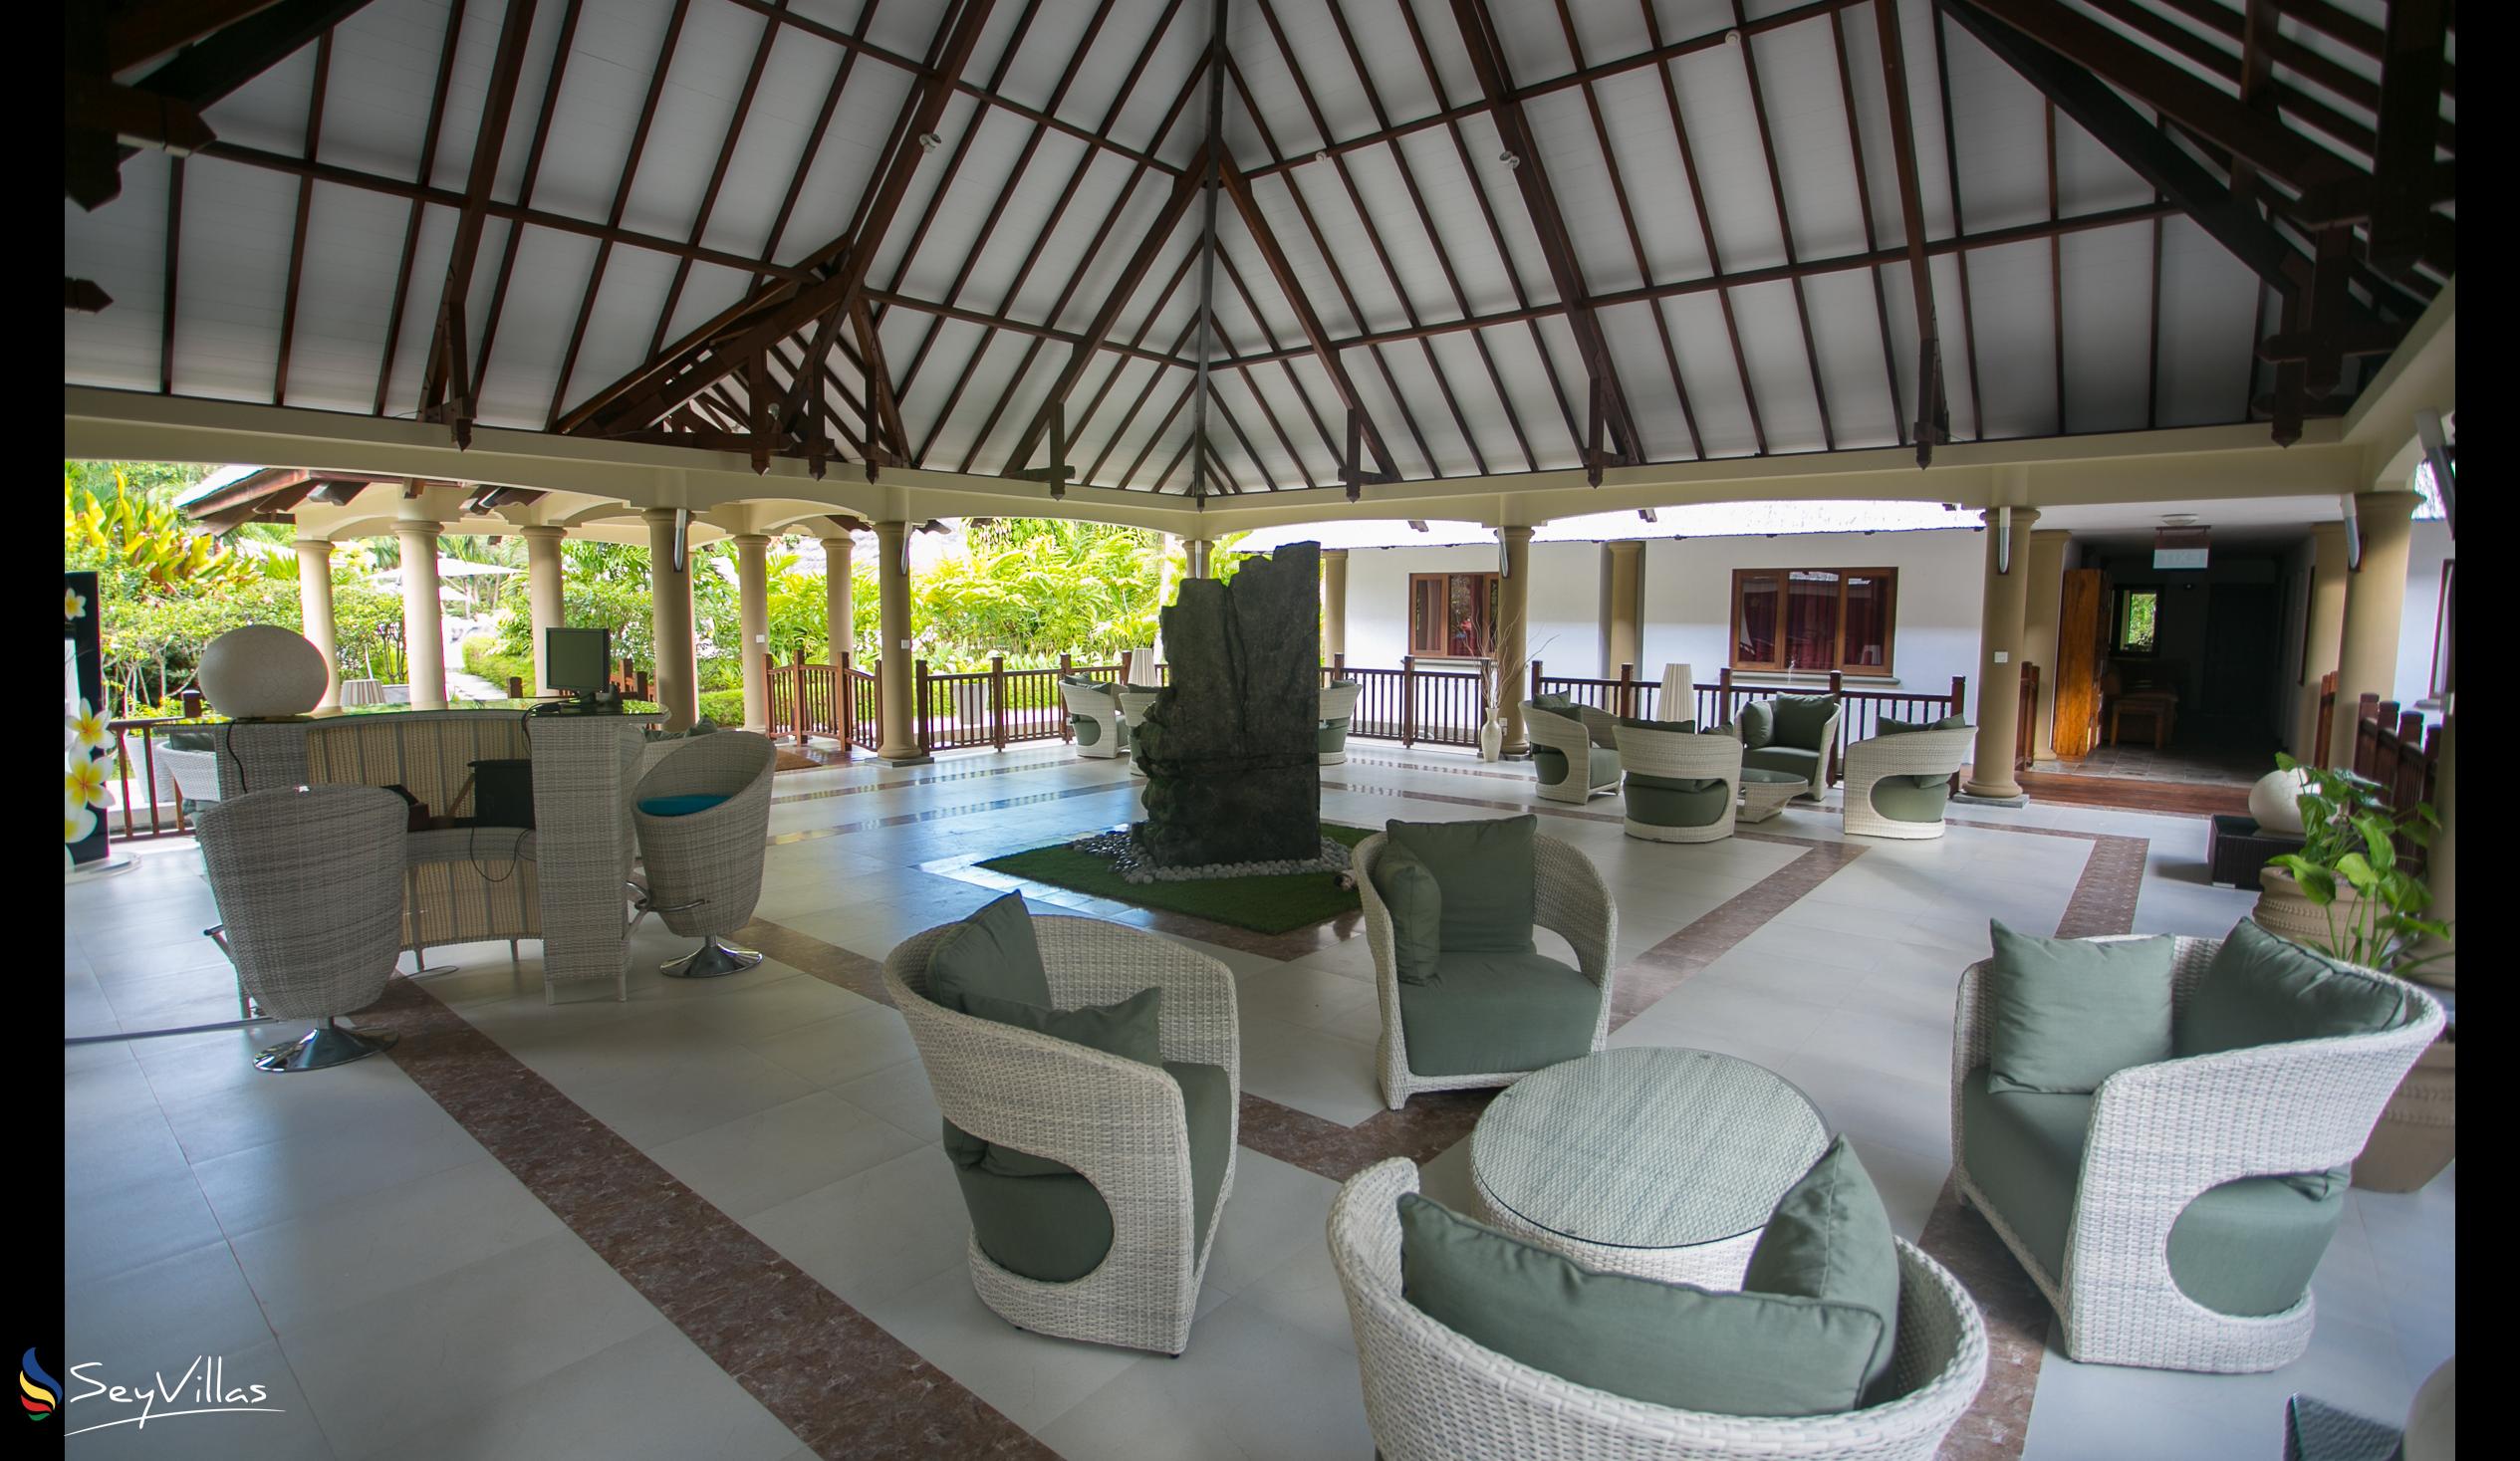 Photo 91: Le Domaine de La Reserve - Indoor area - Praslin (Seychelles)